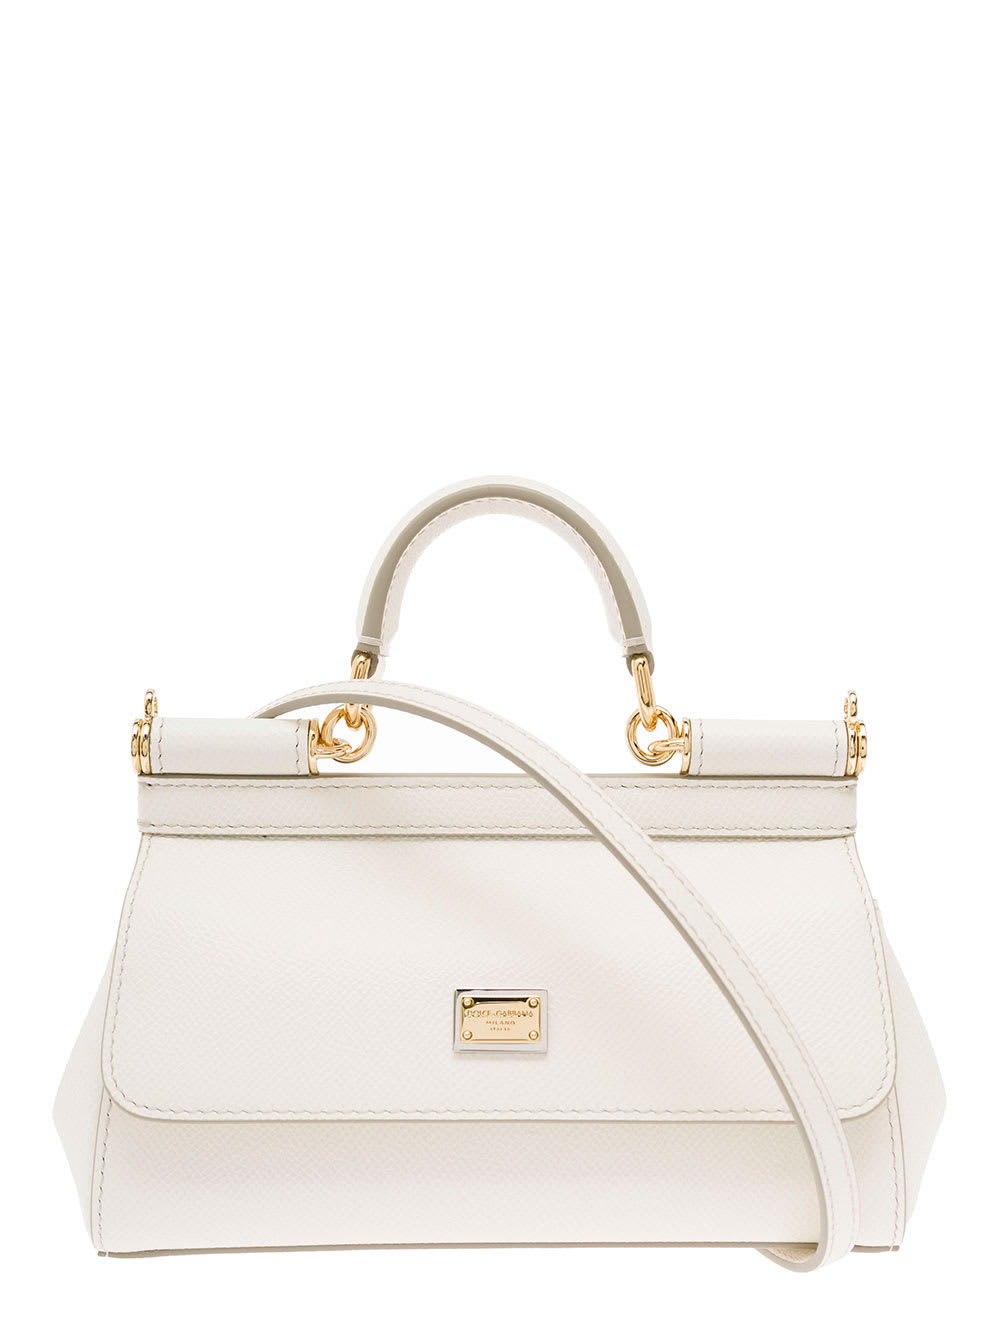 Sicily Small White Leather Handbag Dolce & Gabbana Woman